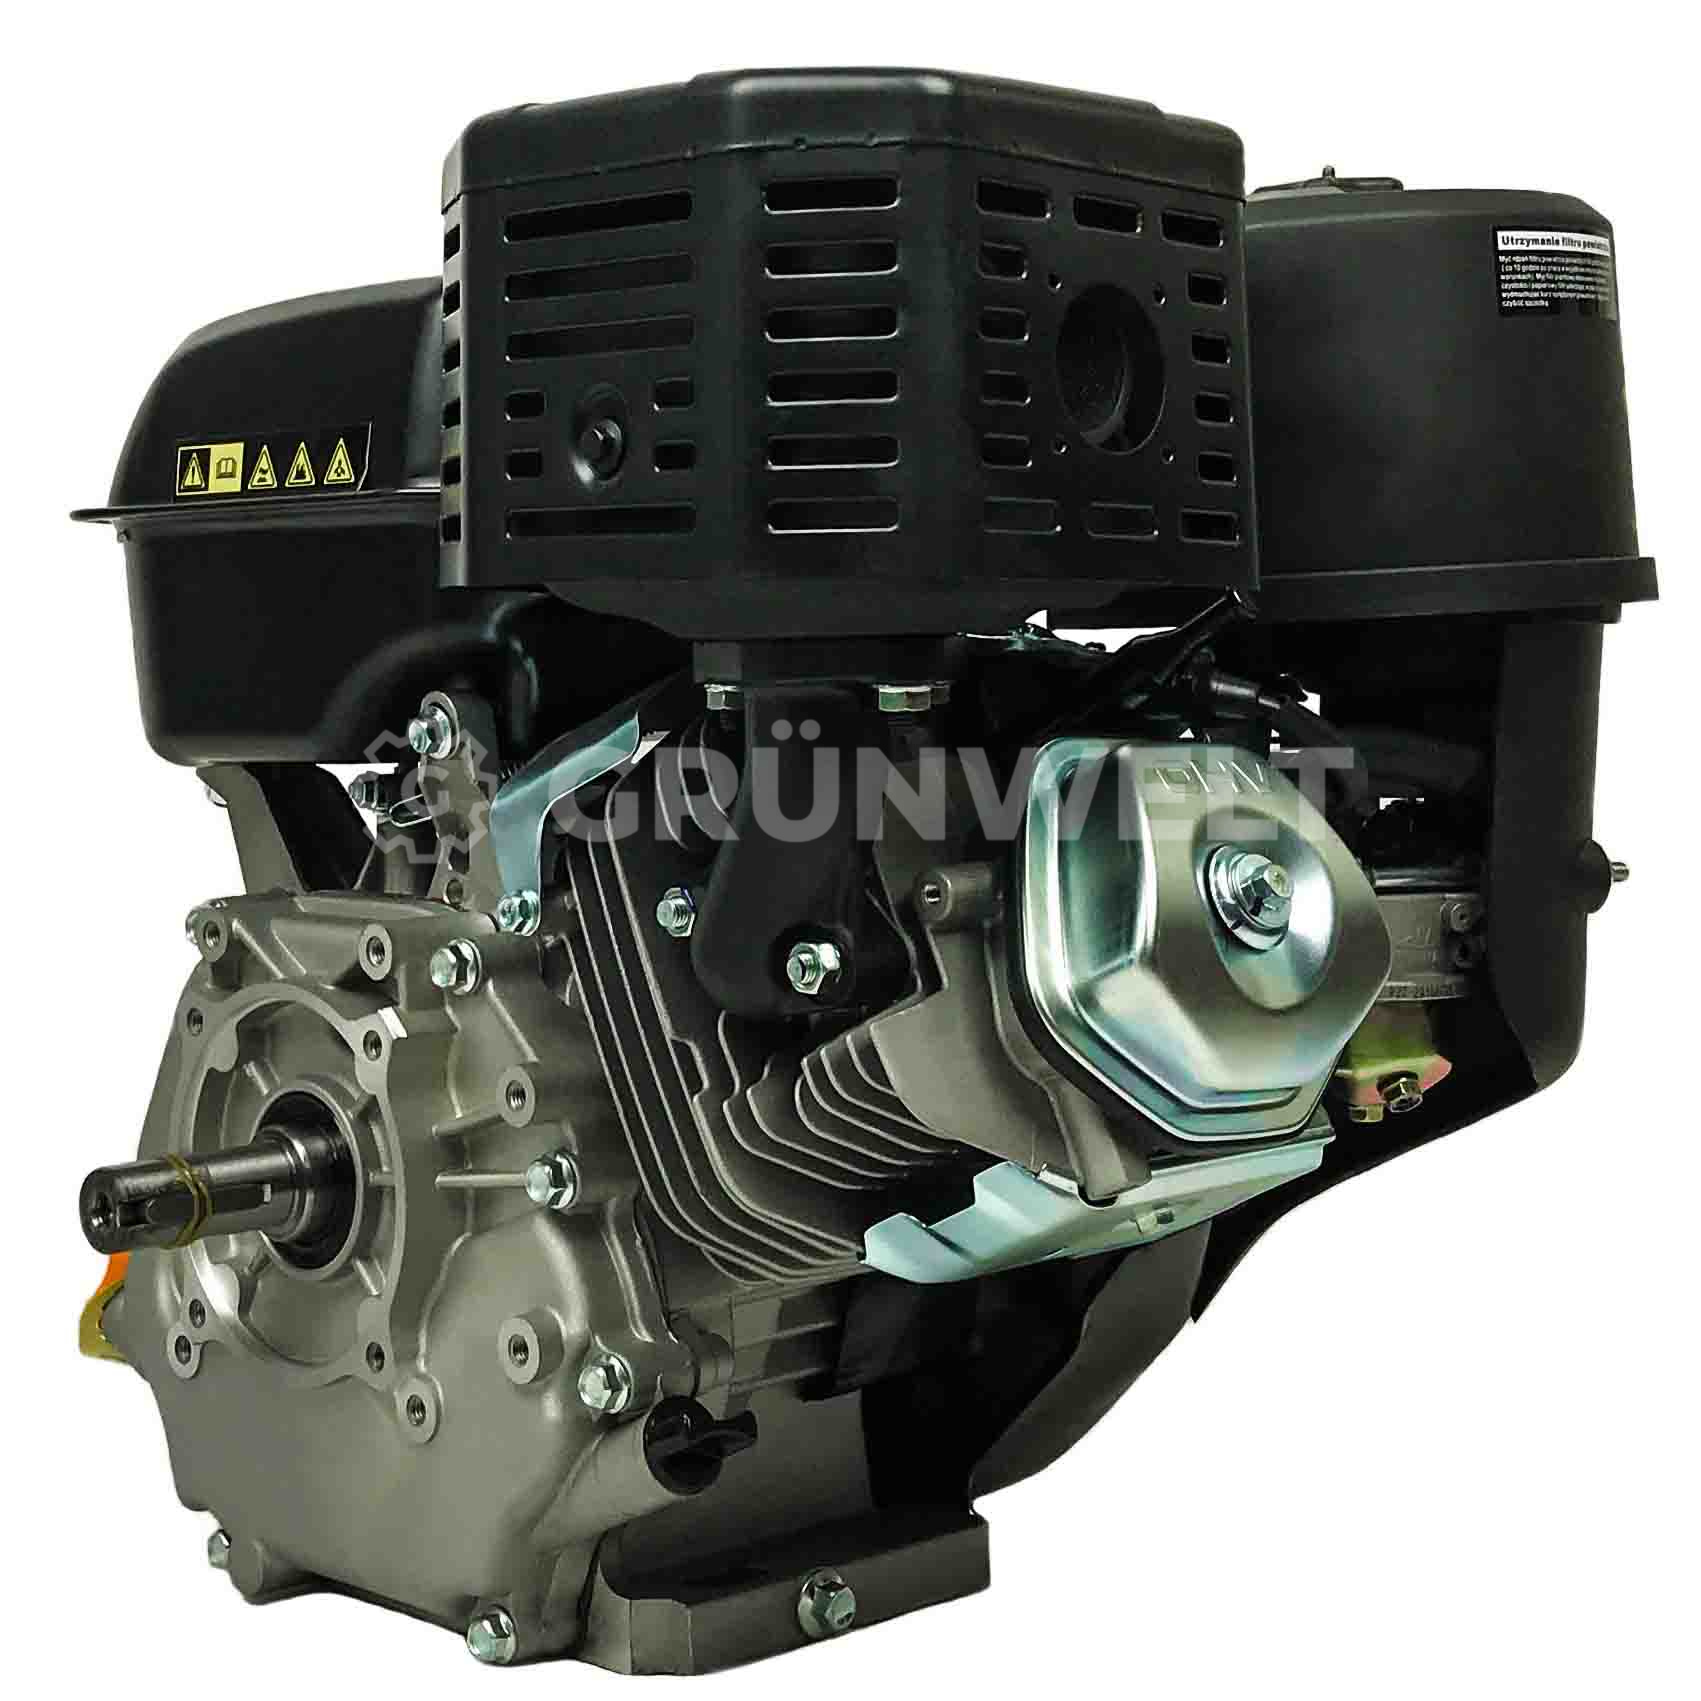 Benzinmotor Loncin LC170F-2 (20 mm) - Gruenwelt Shop